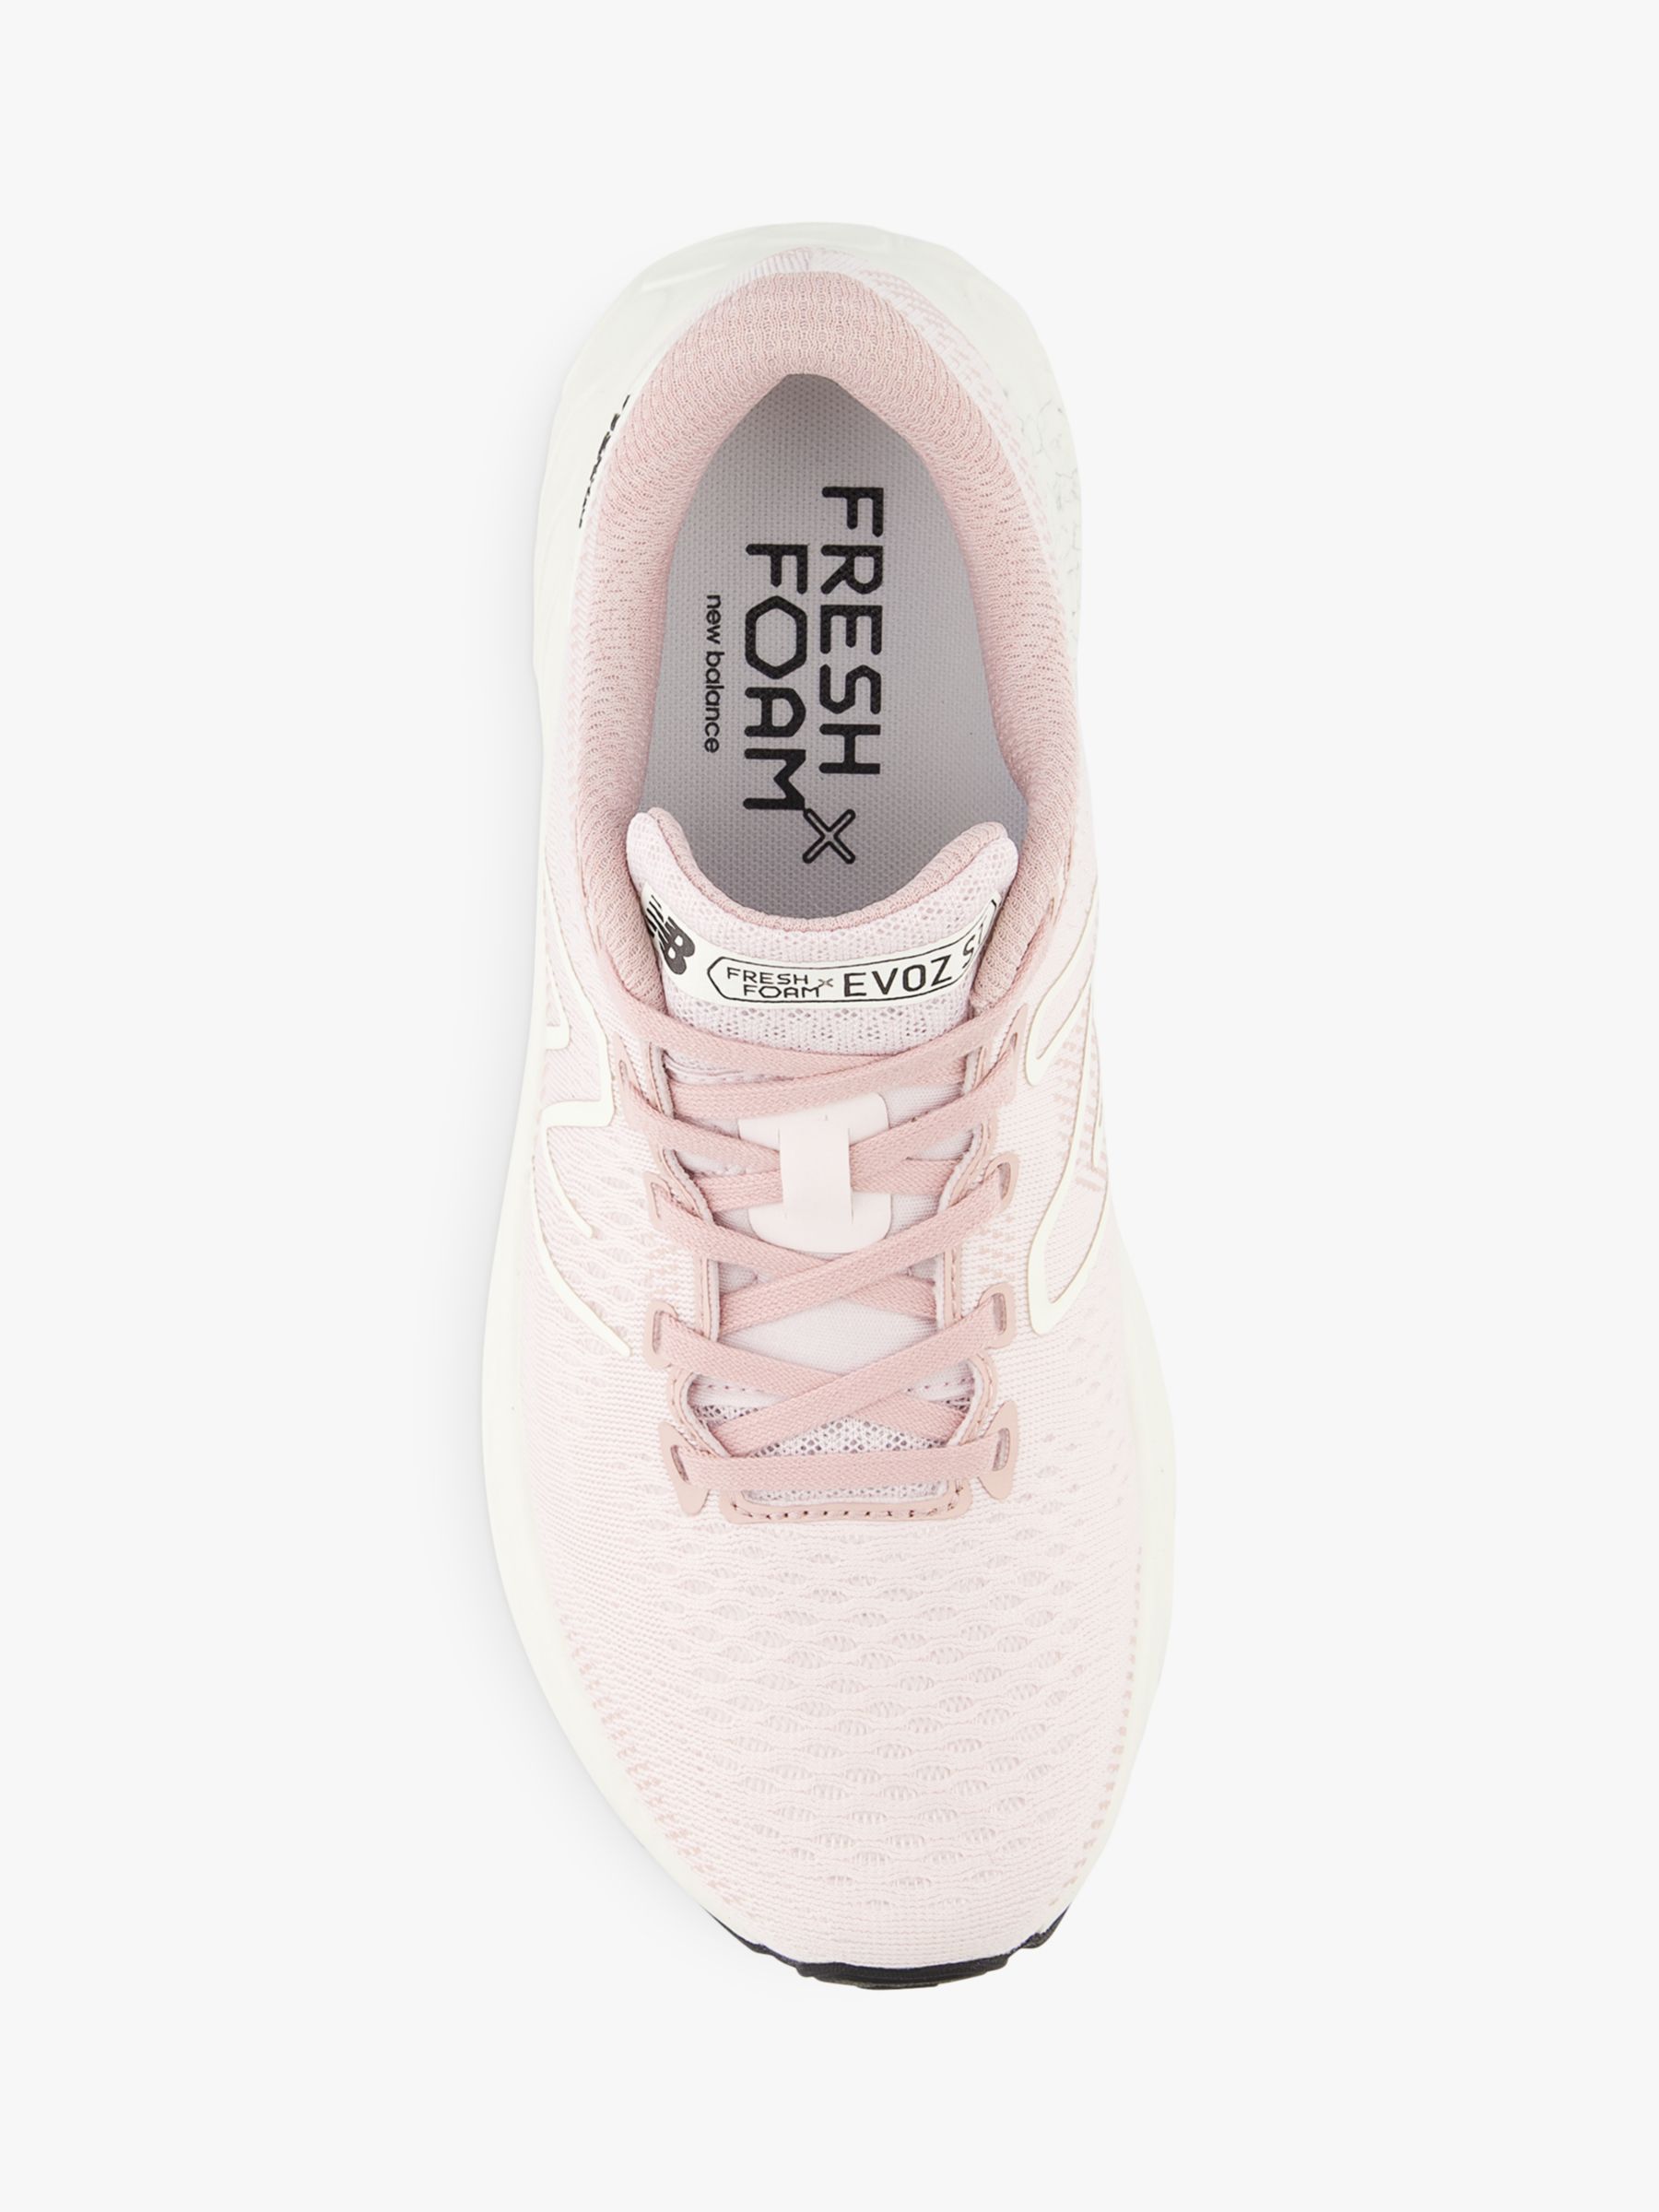 New Balance Fresh Foam X Evoz ST Women's Running Shoes, Pink Granite 667, 6.5